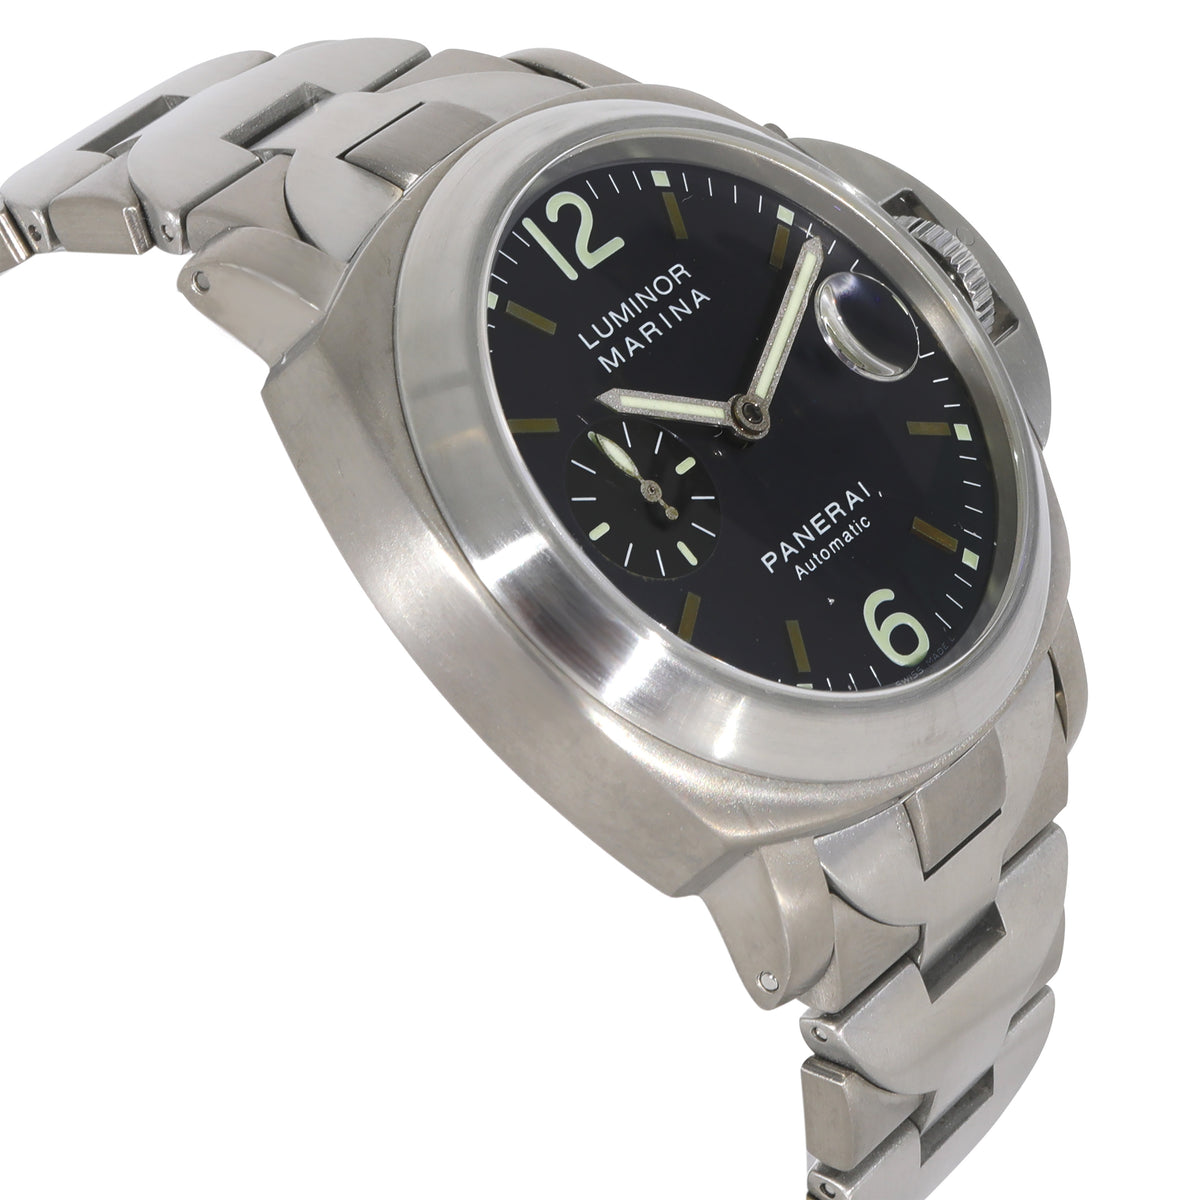 Luminor Marina PAM00091 Men's Watch in  Titanium